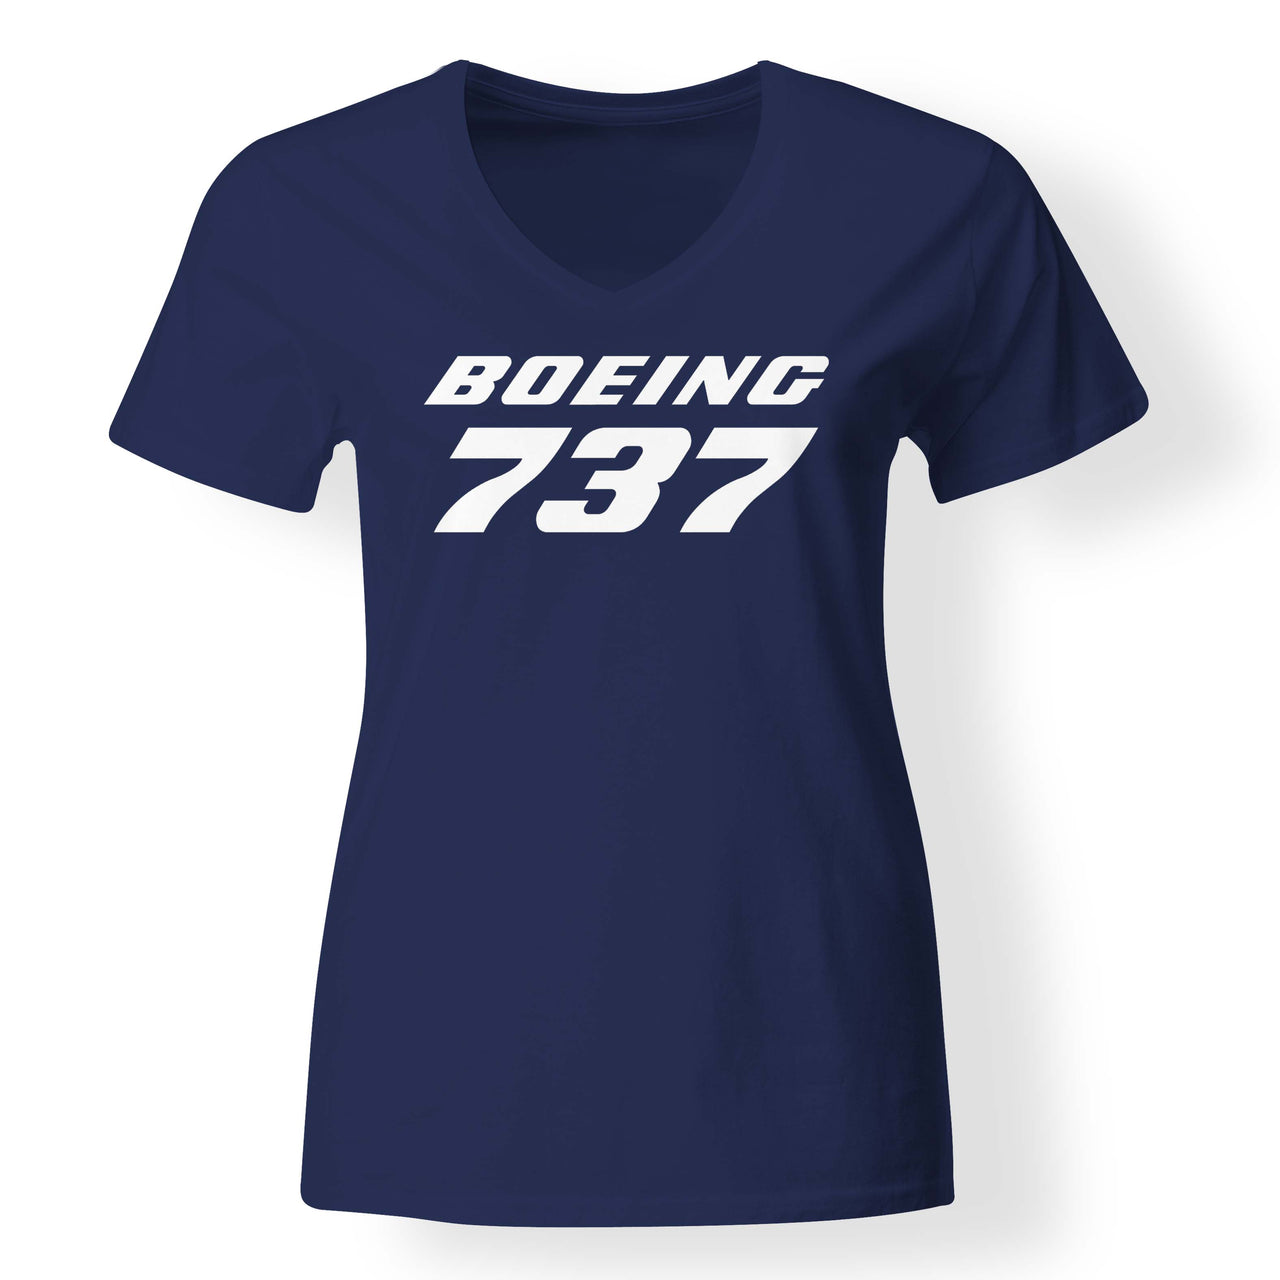 Boeing 737 & Text Designed V-Neck T-Shirts